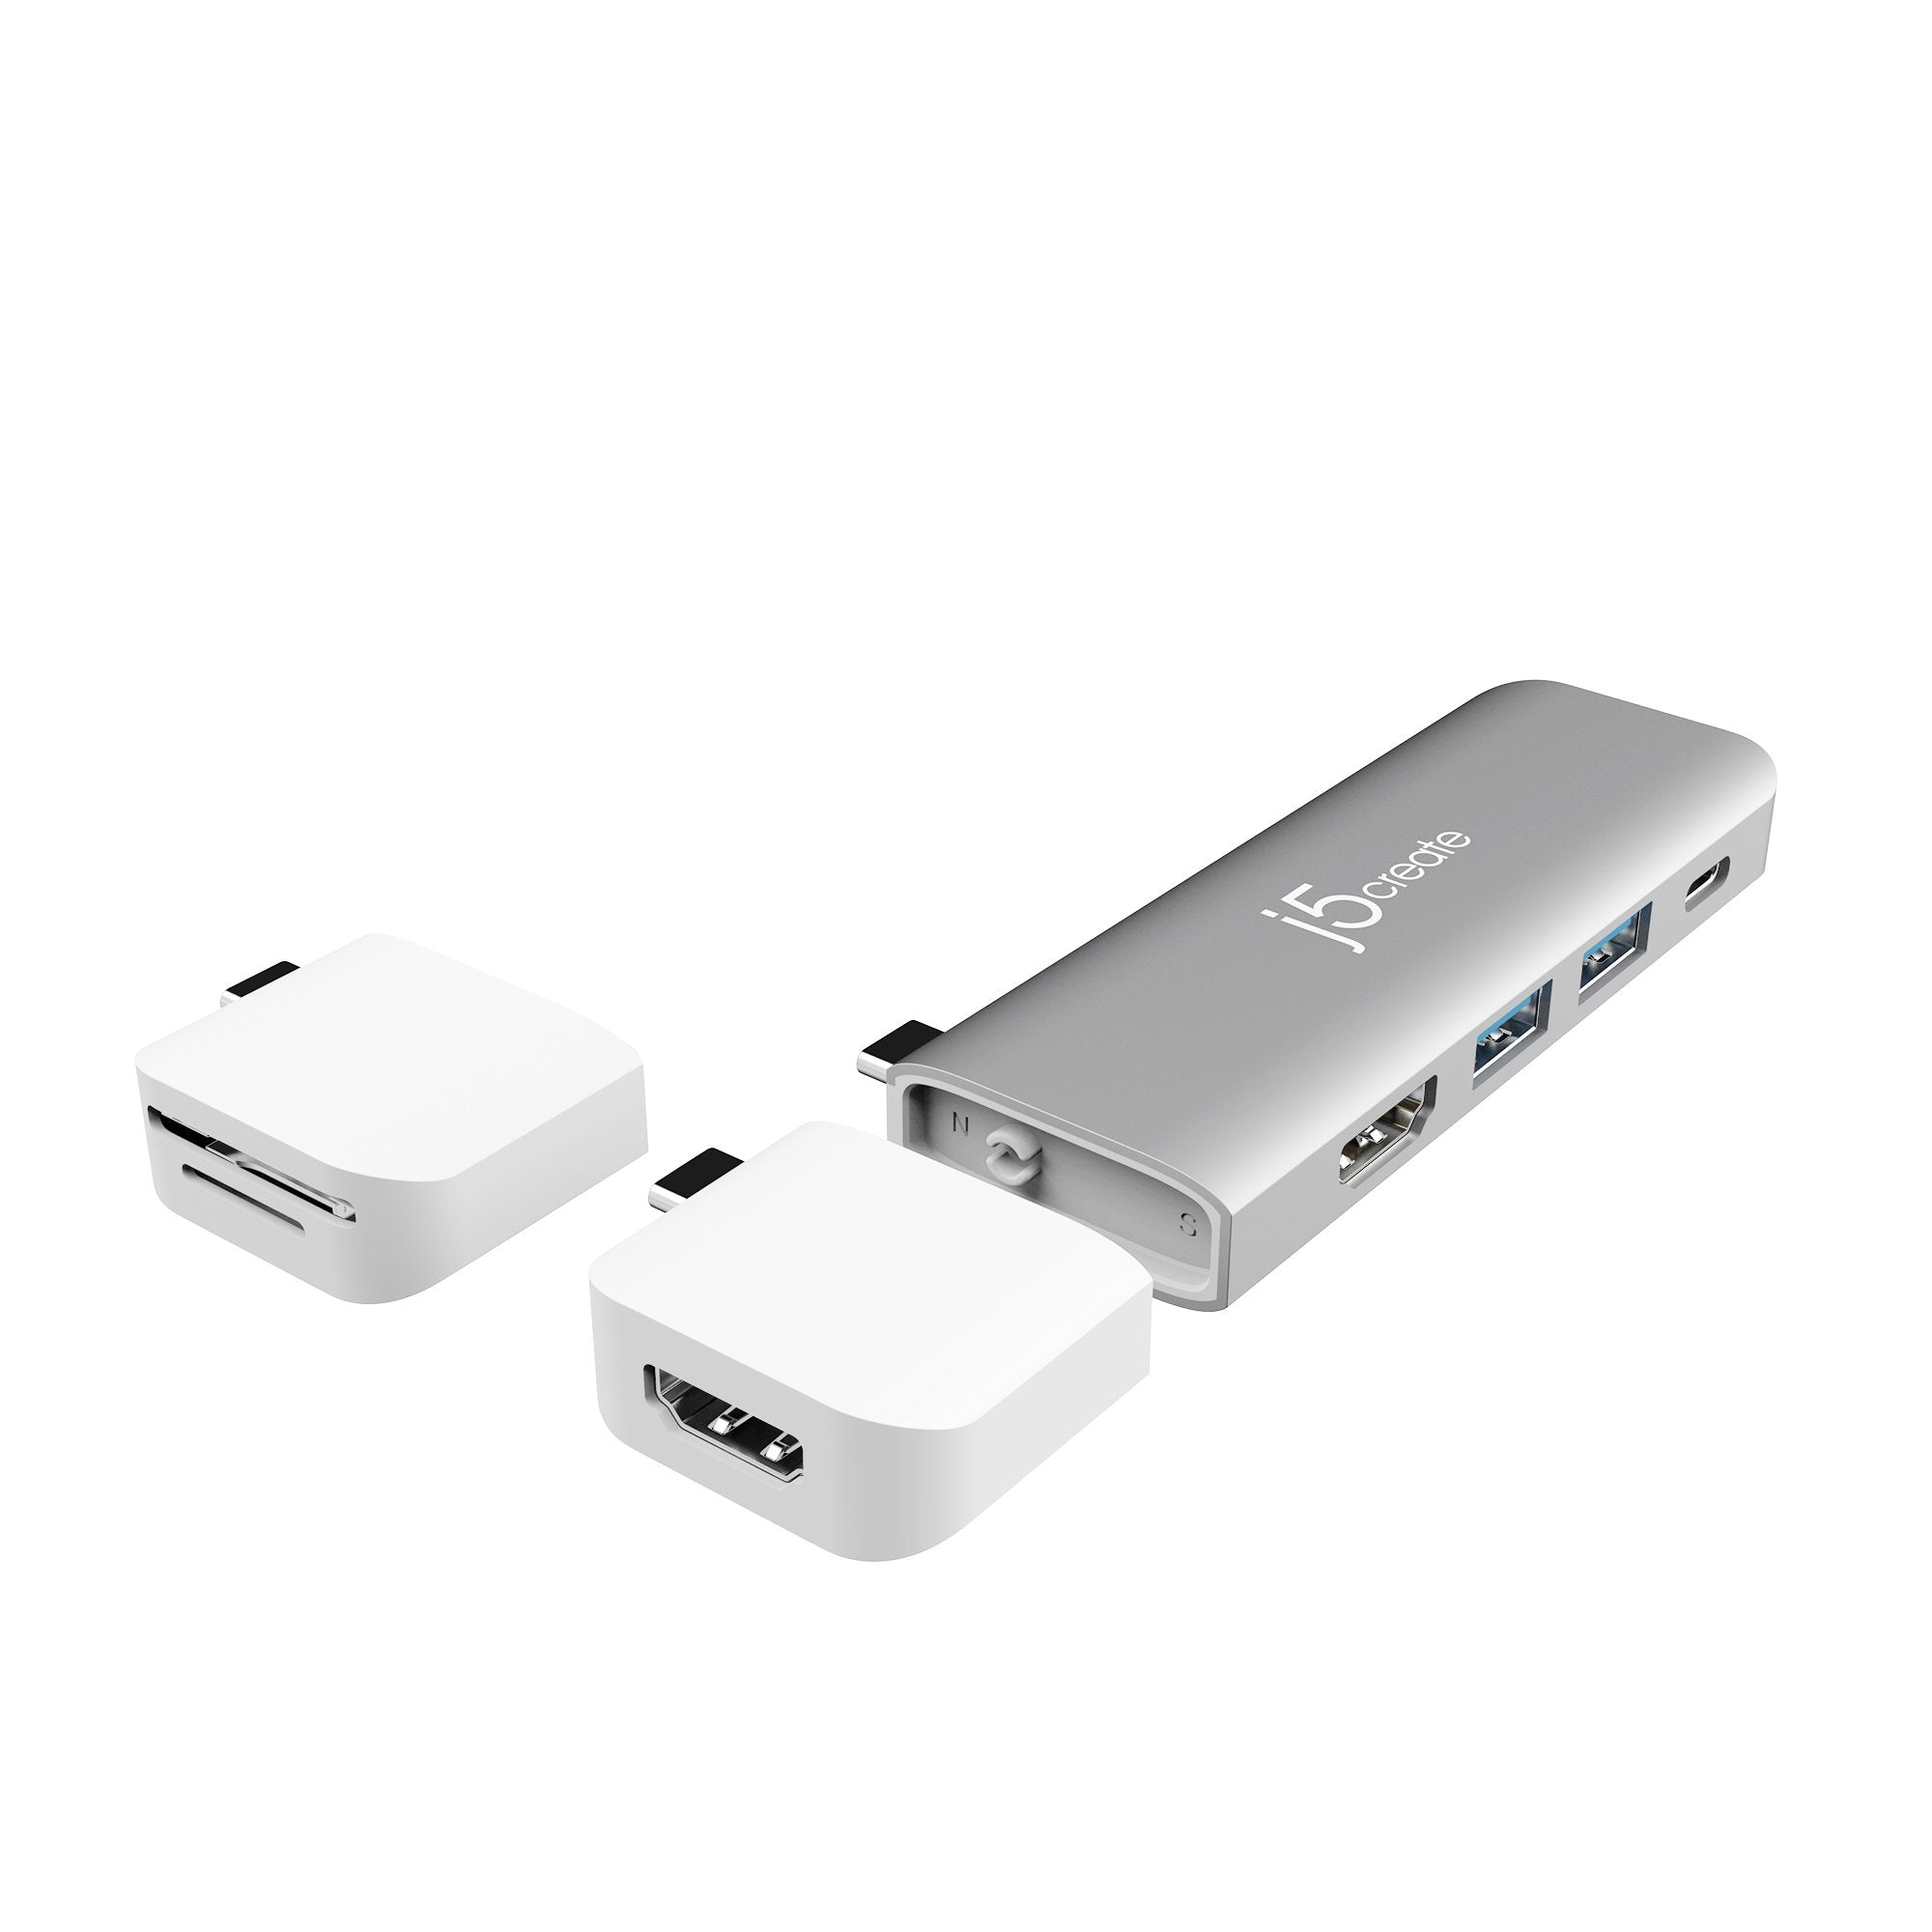 Модульная док-станция j5create ULTRADRIVE Kit USB-C для Apple MacBook, MacBook Air, MacBook Pro, USB-C™ Power Delivery 3.0, USB-C™ 3.1 Gen 1, x2 USB™ 3.1 Gen 1 Type-A, 4K HDMI, Magnetic Kits (USB-C™ to 4K HDMI™ & USB-C™ to SD™ & microSD™ 3.0), серебристый/белый (JCD387)